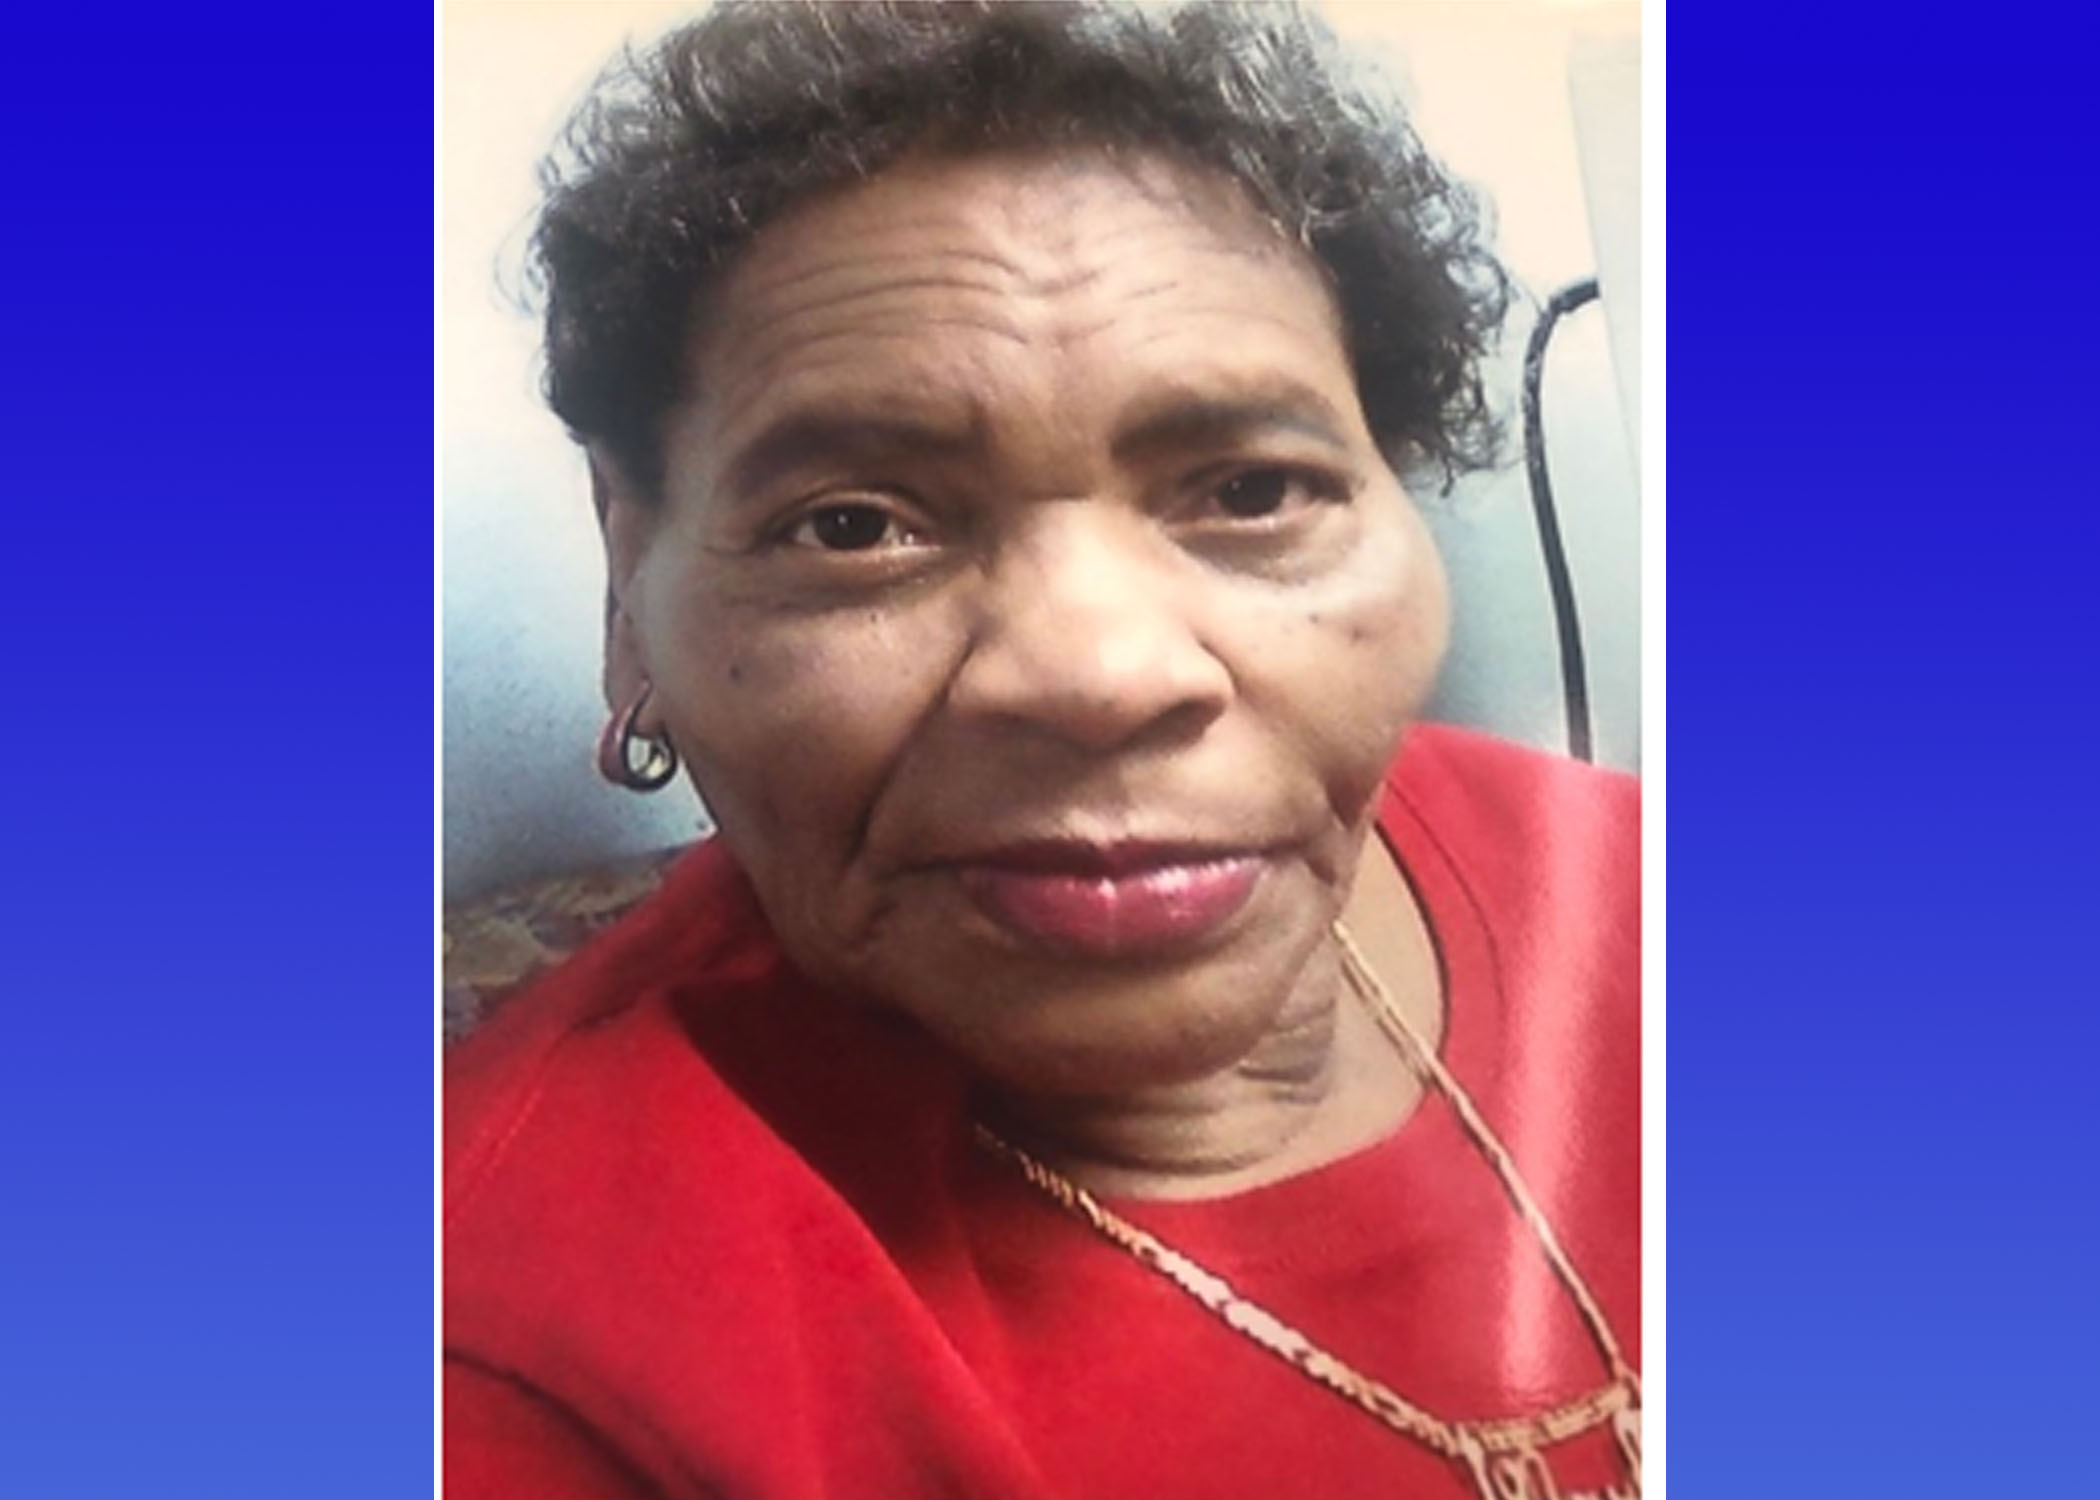 Renewed pleas to help find missing 81-year-old Birmingham woman